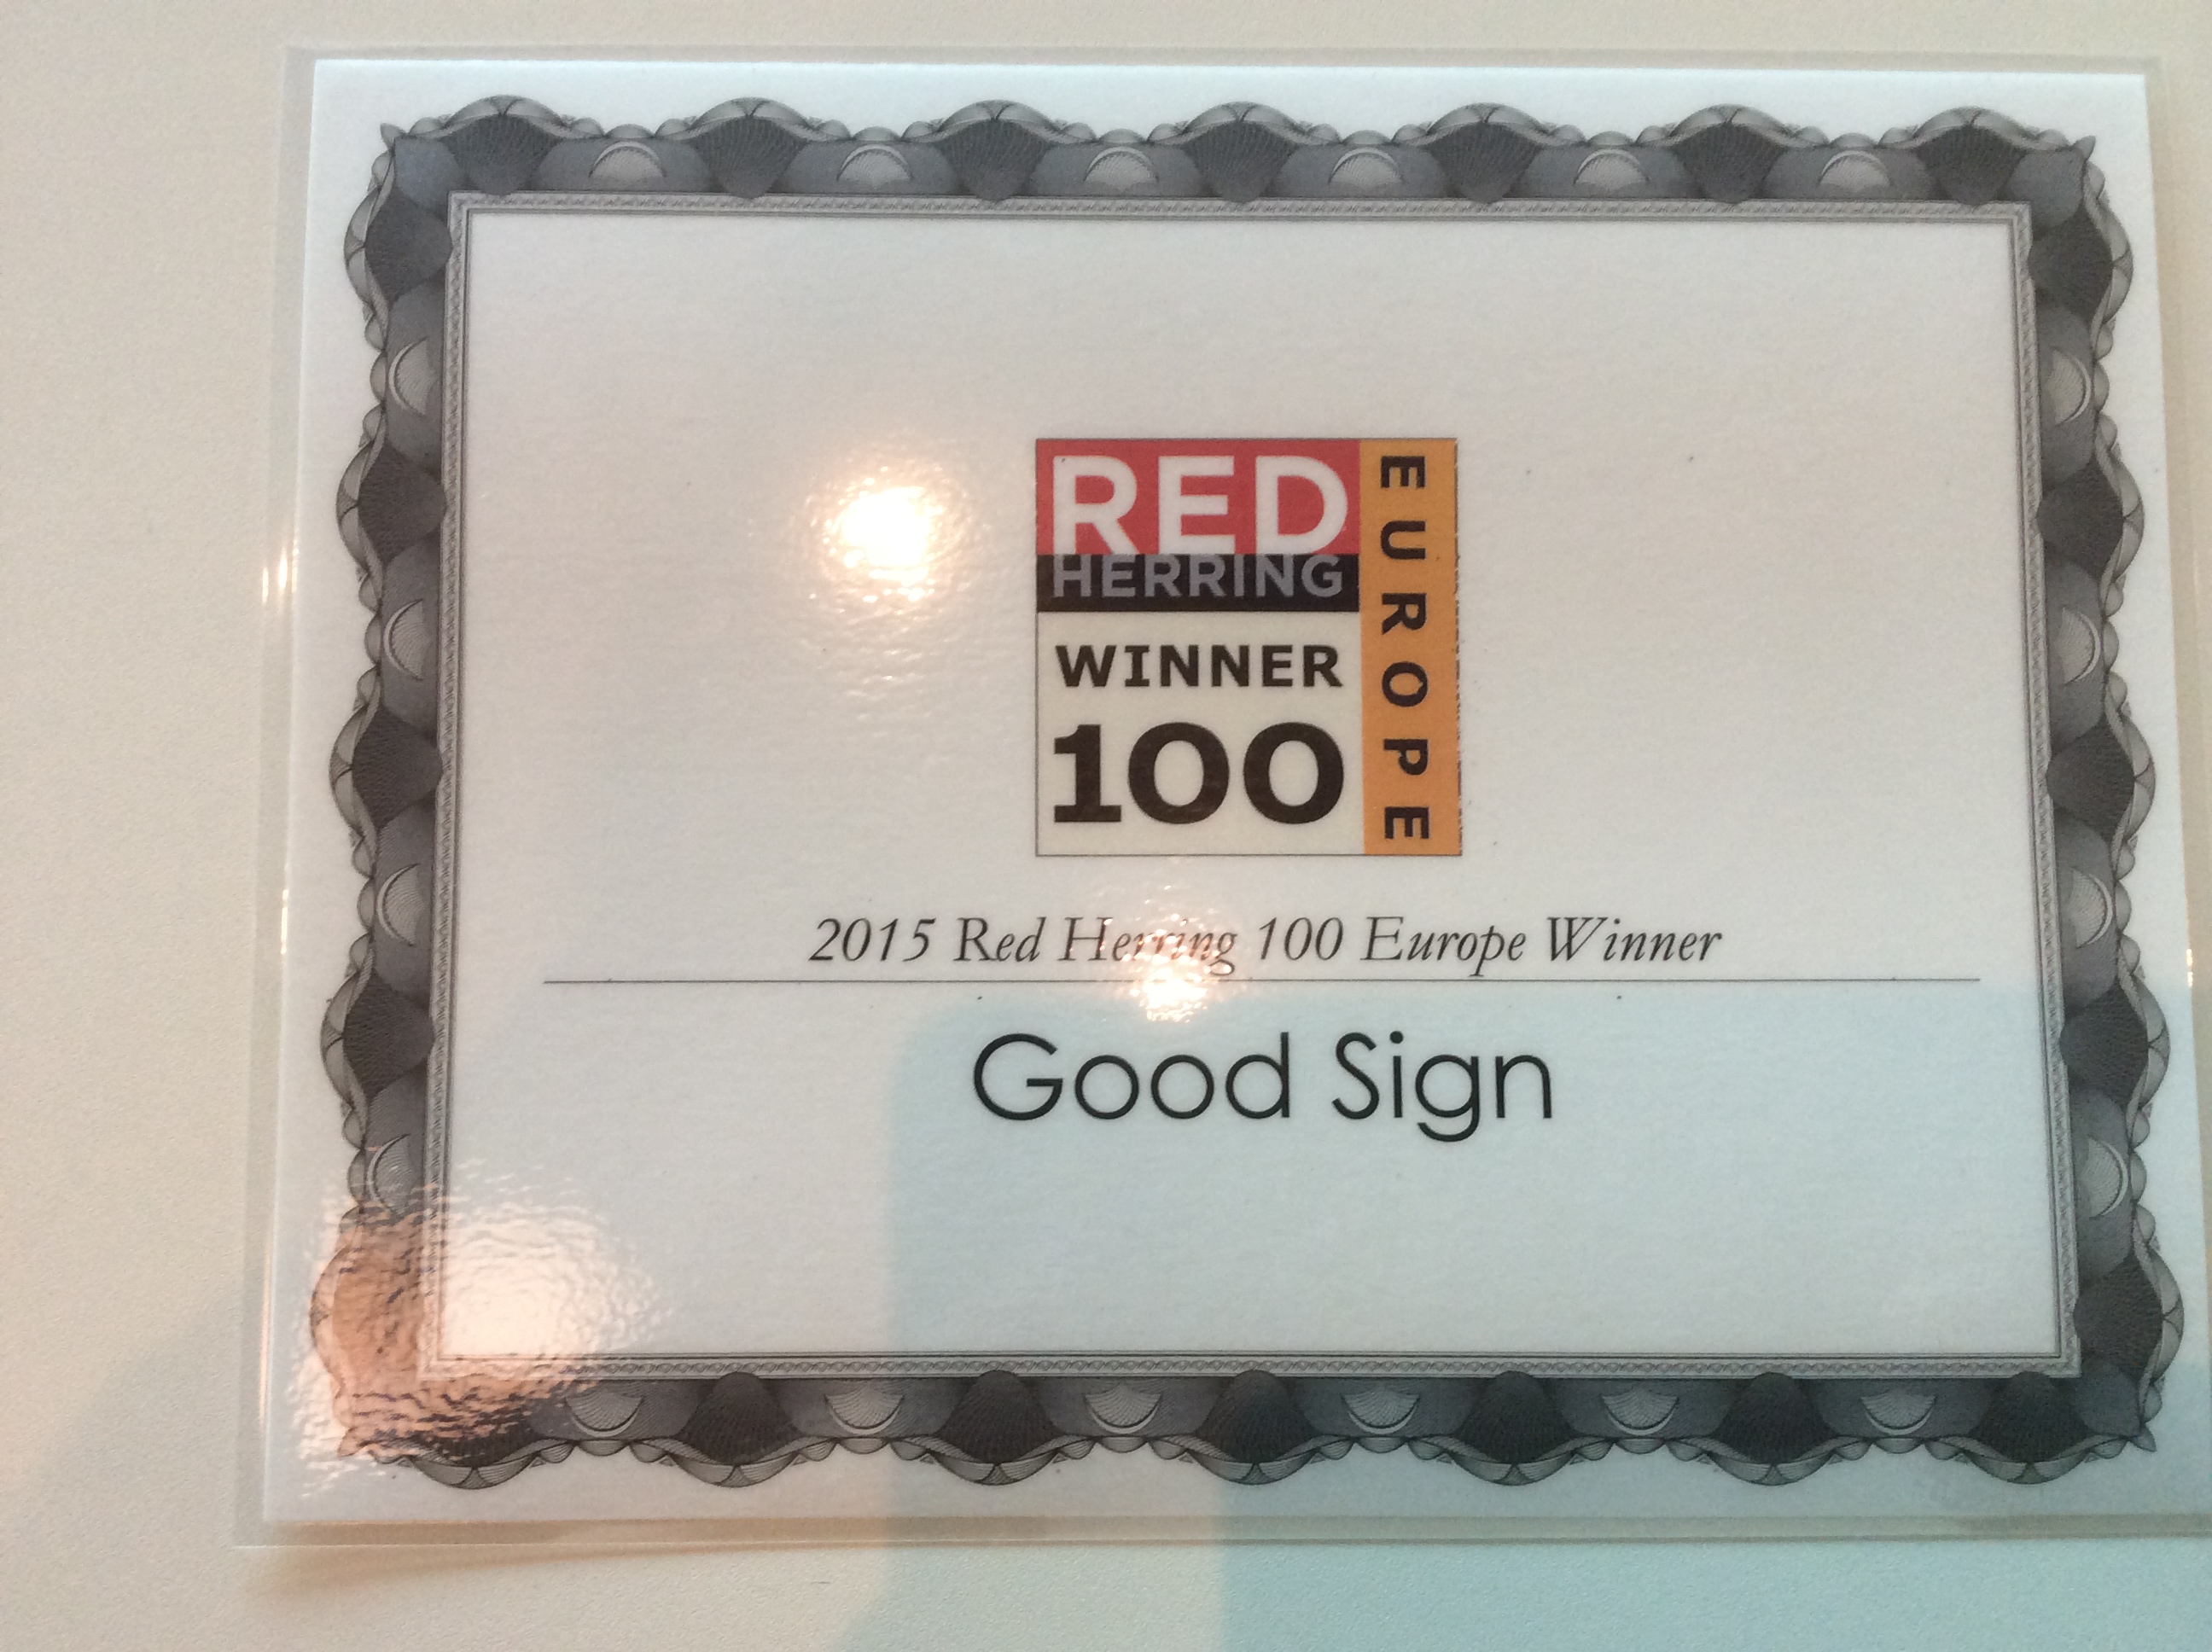 Good Sign named Winner of the 2015 Red Herring Top 100 Europe Award